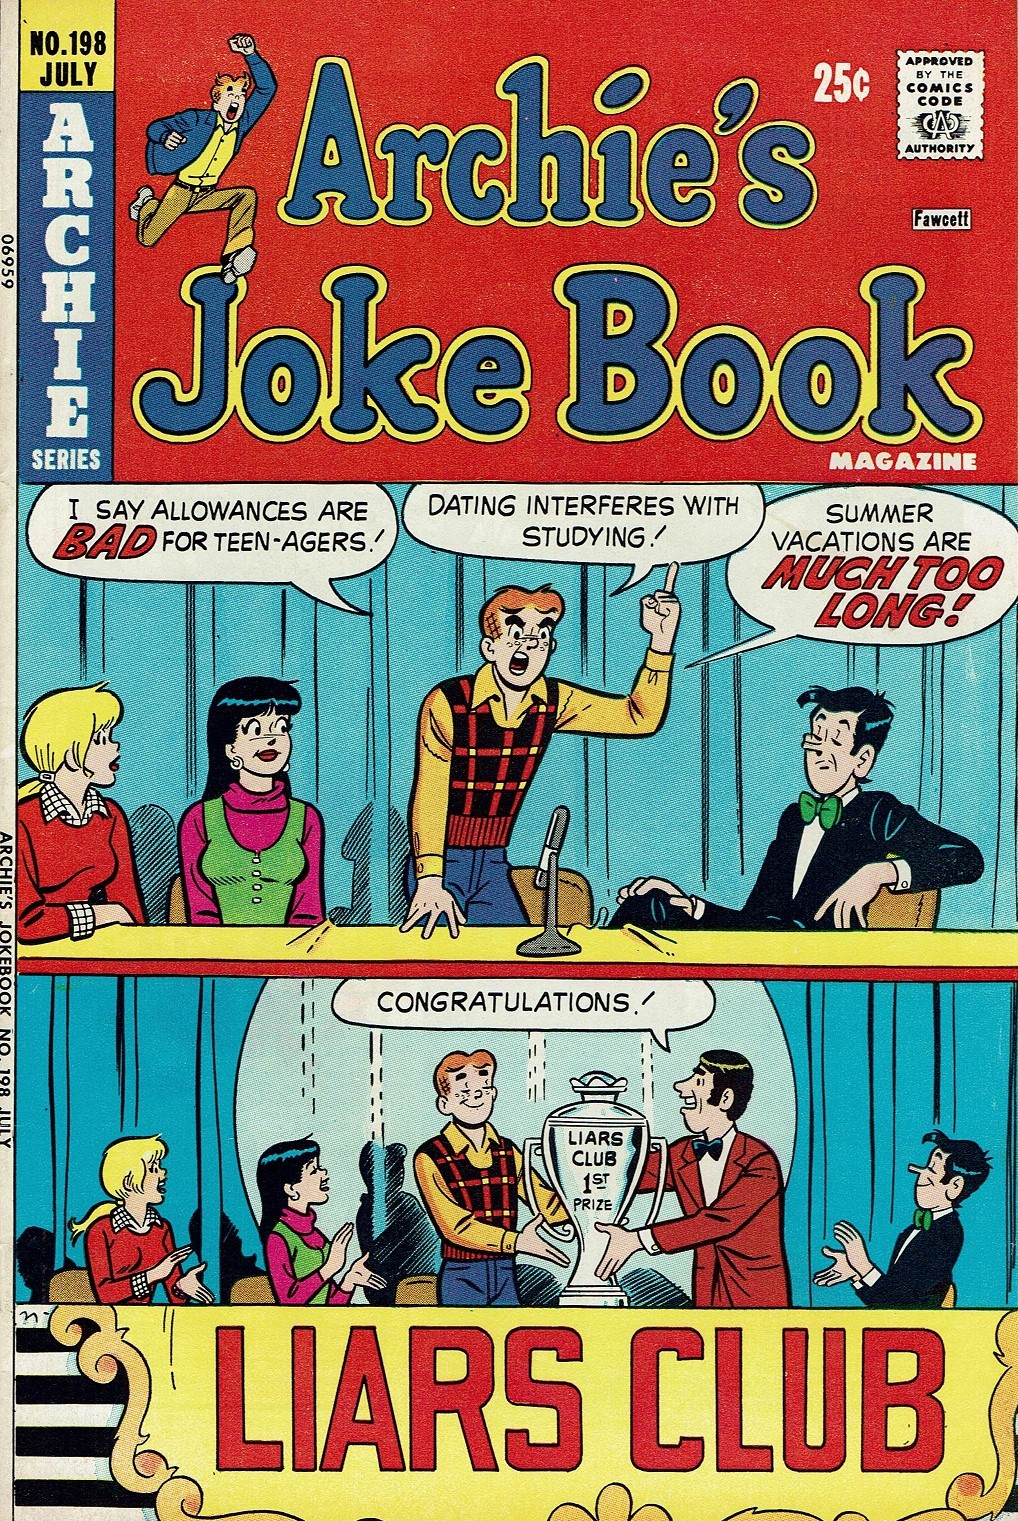 Archie's Joke Book Magazine issue 198 - Page 1